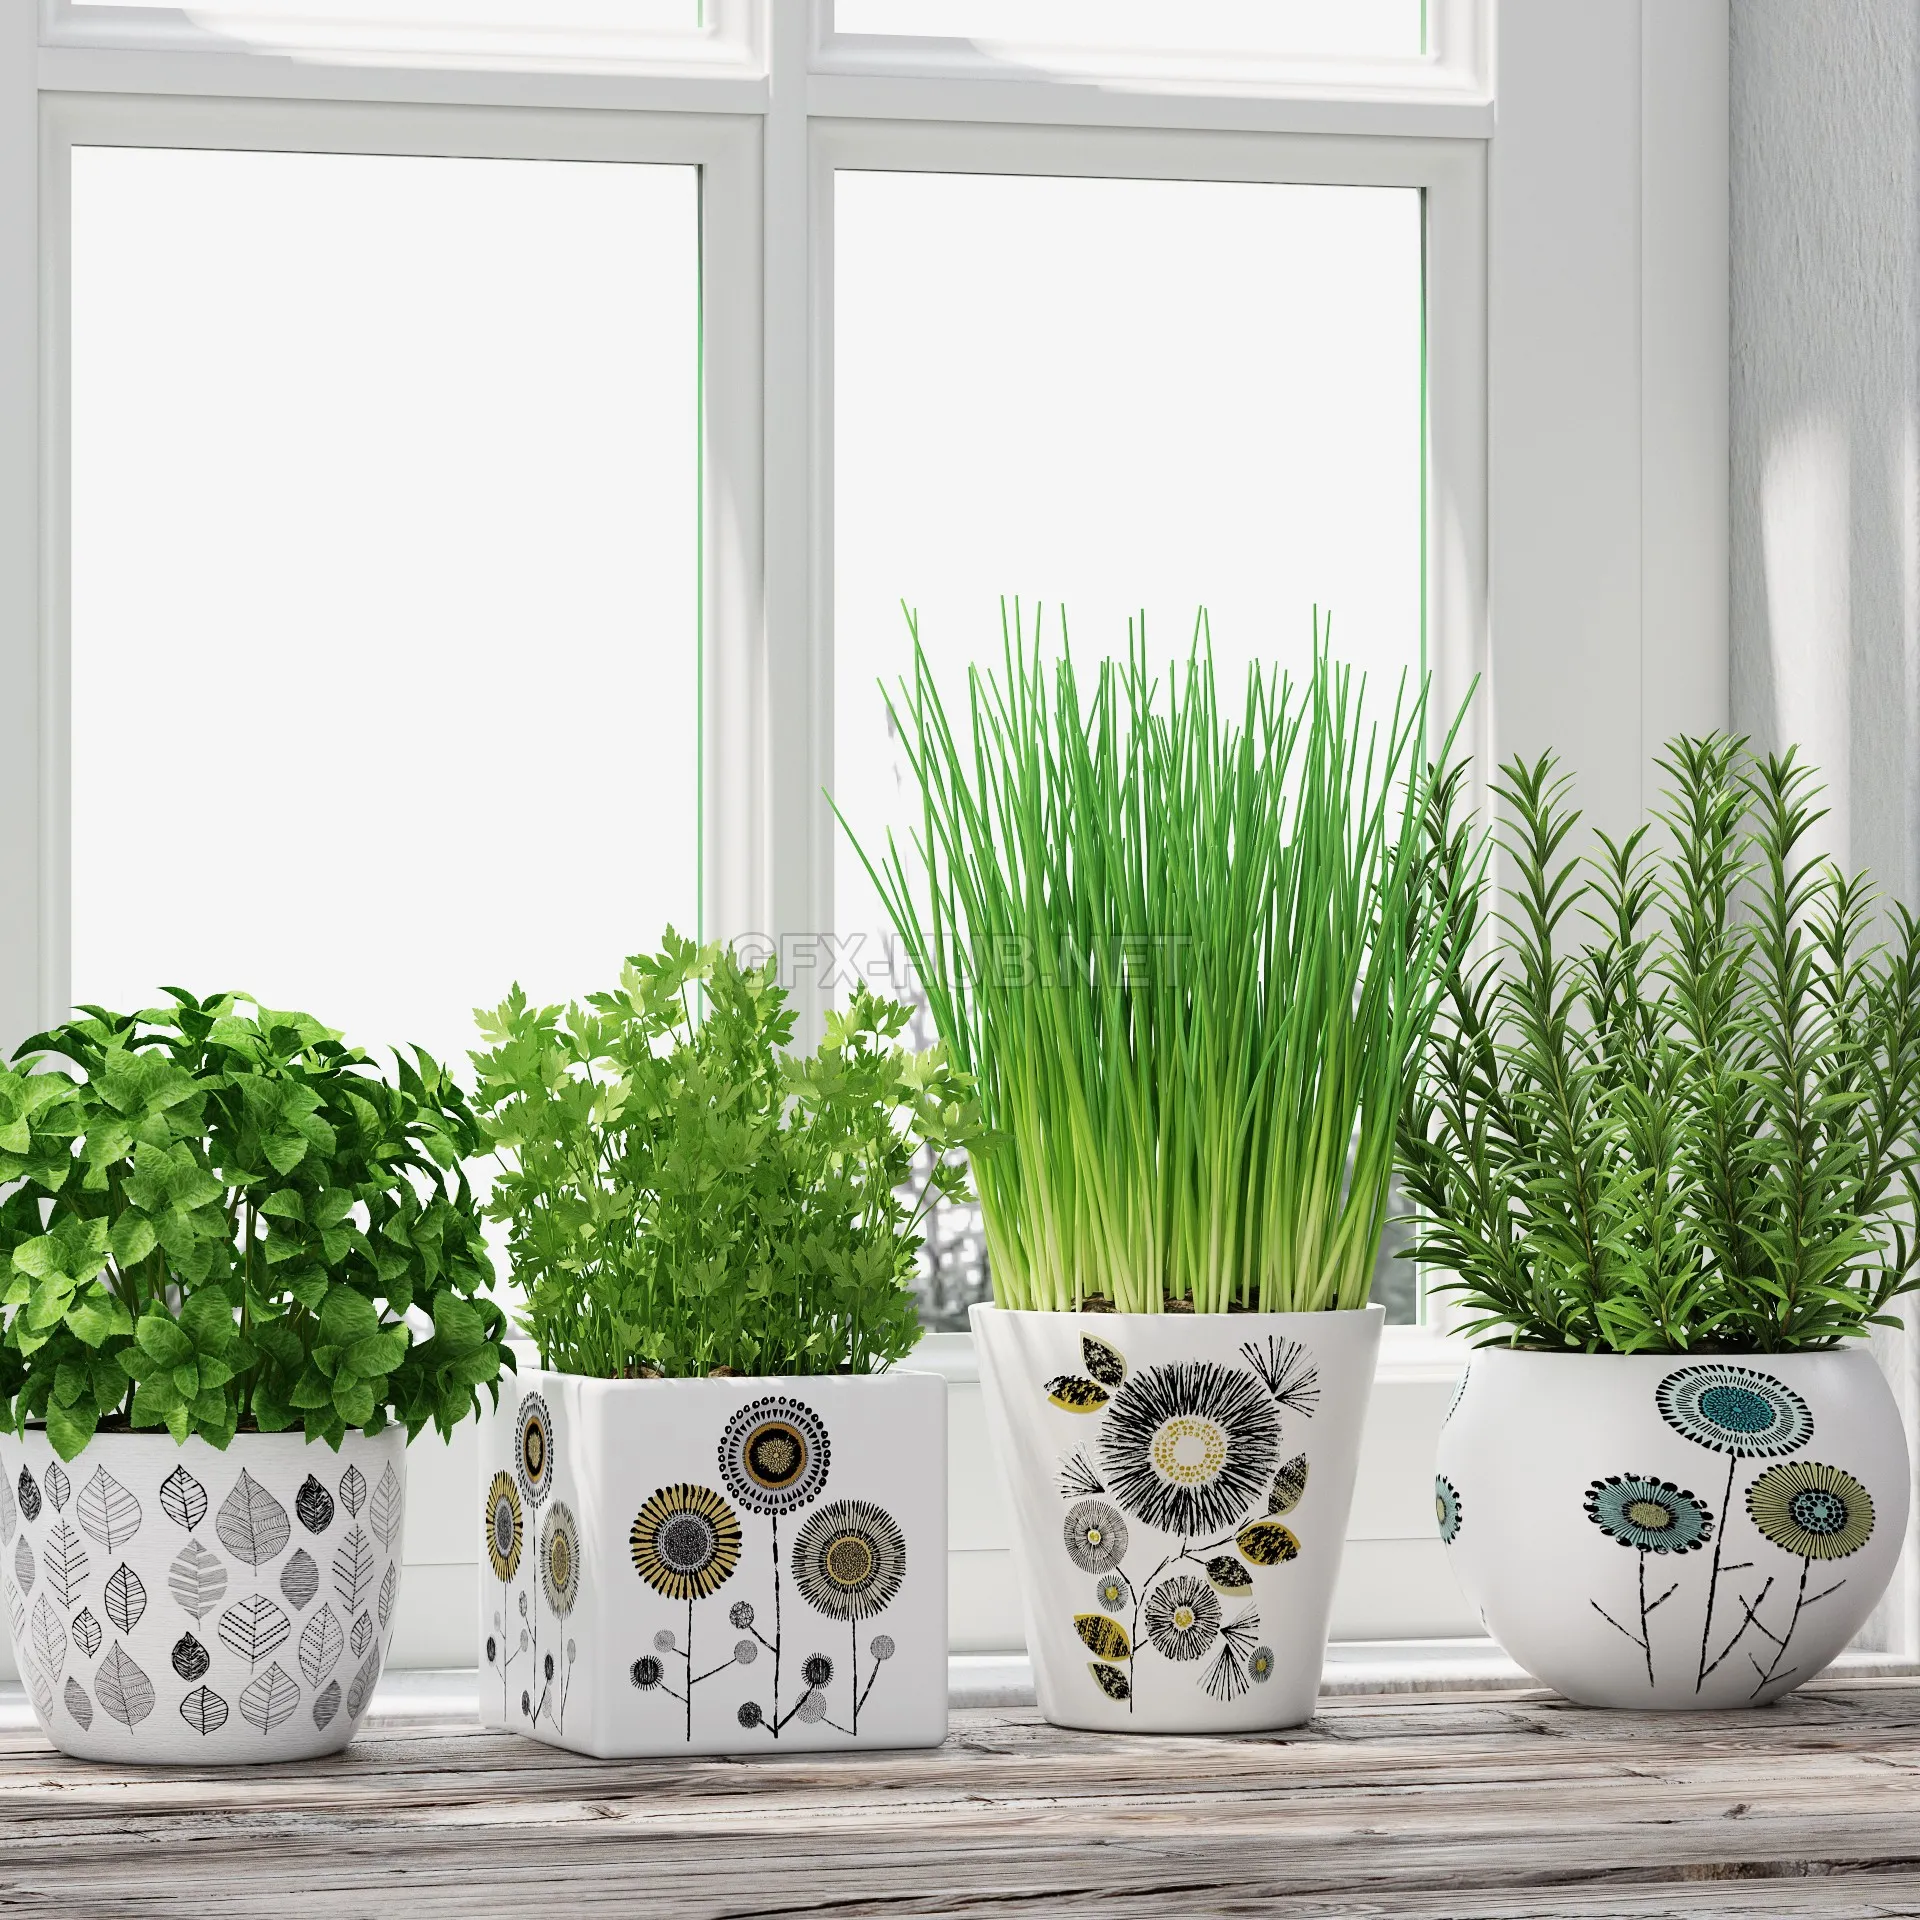 FURNITURE 3D MODELS – Herbs in pots